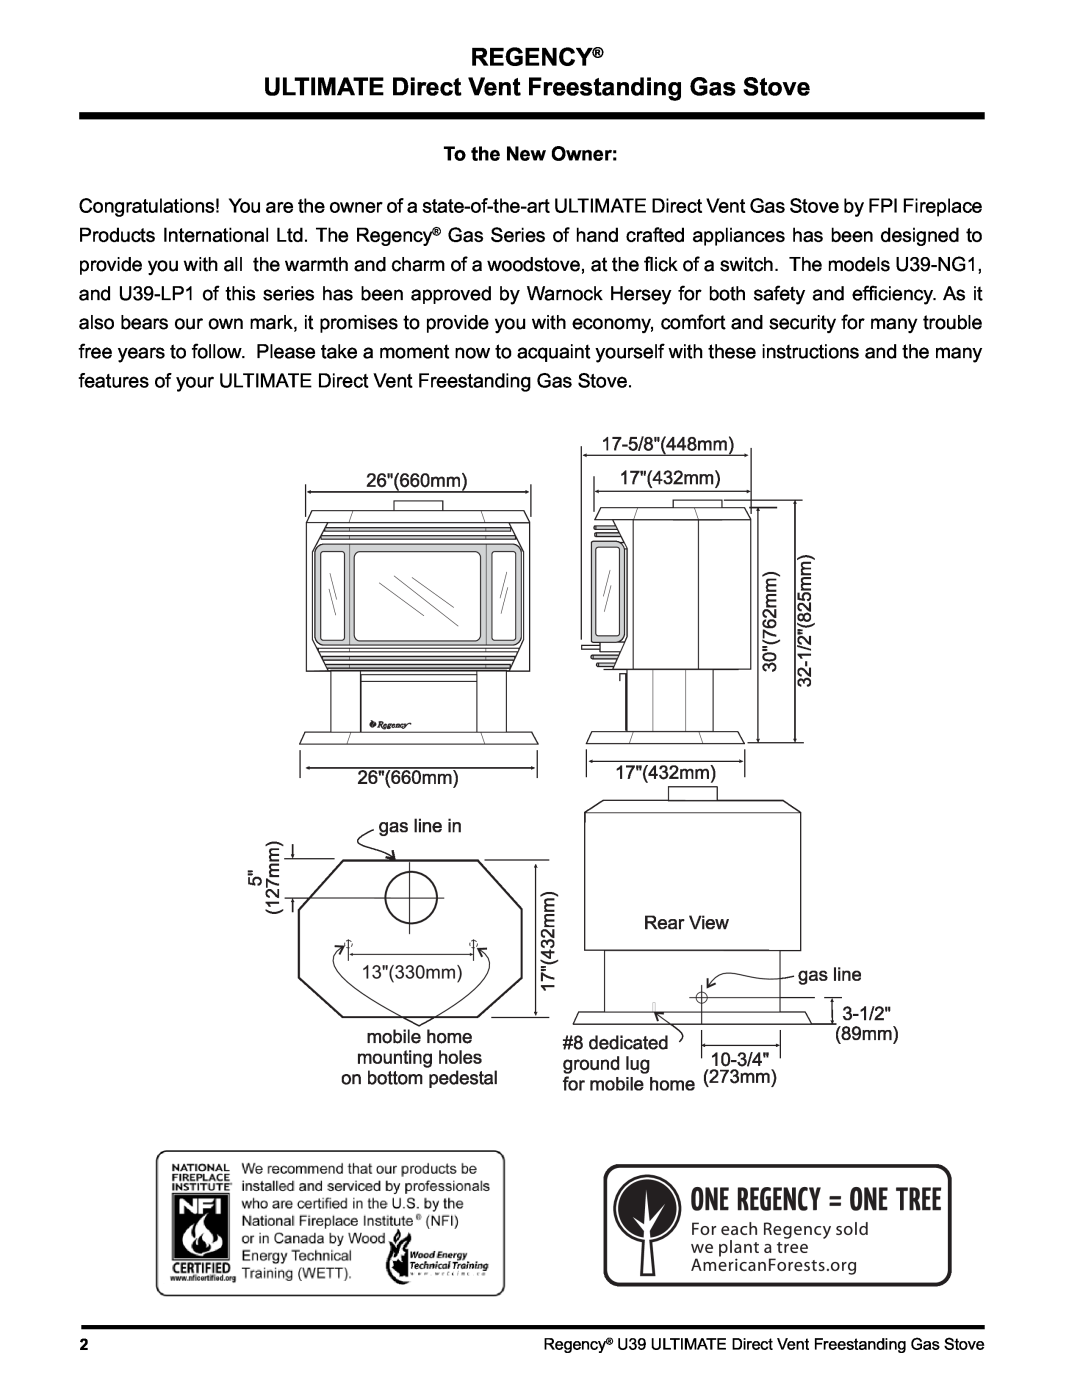 Regency U39-LP1, U39-NG1 installation manual Regency, ULTIMATE Direct Vent Freestanding Gas Stove, To the New Owner 